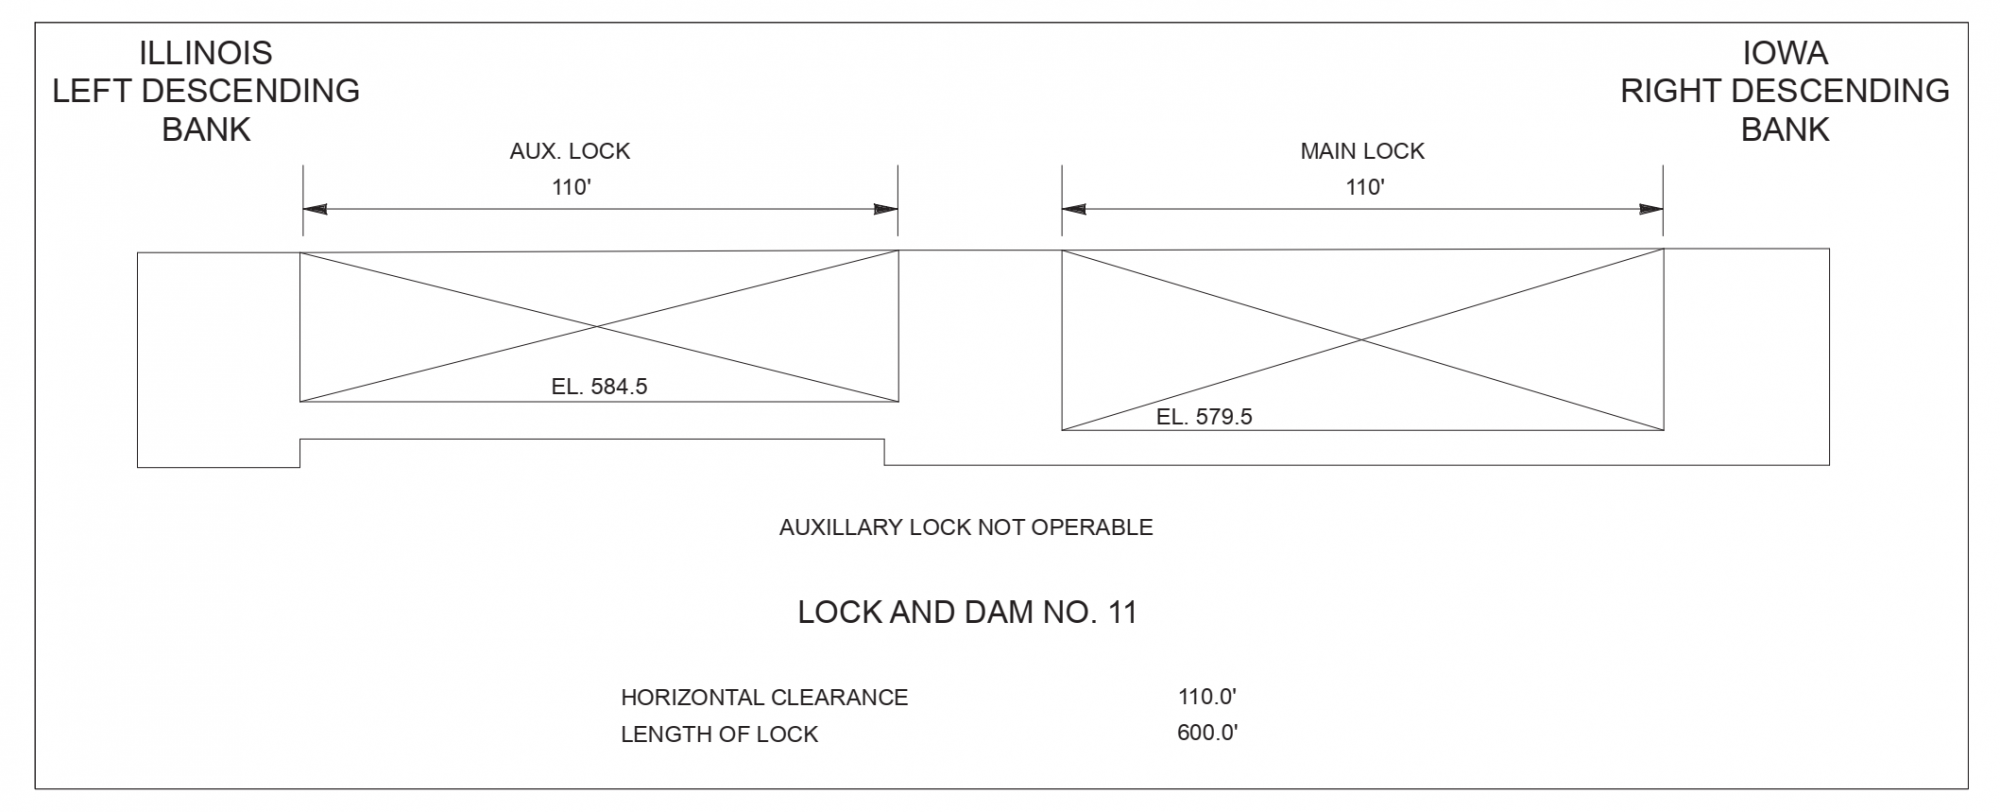 Dubuque Lock and Dam No. 11 Clearances | Bridge Calculator LLC